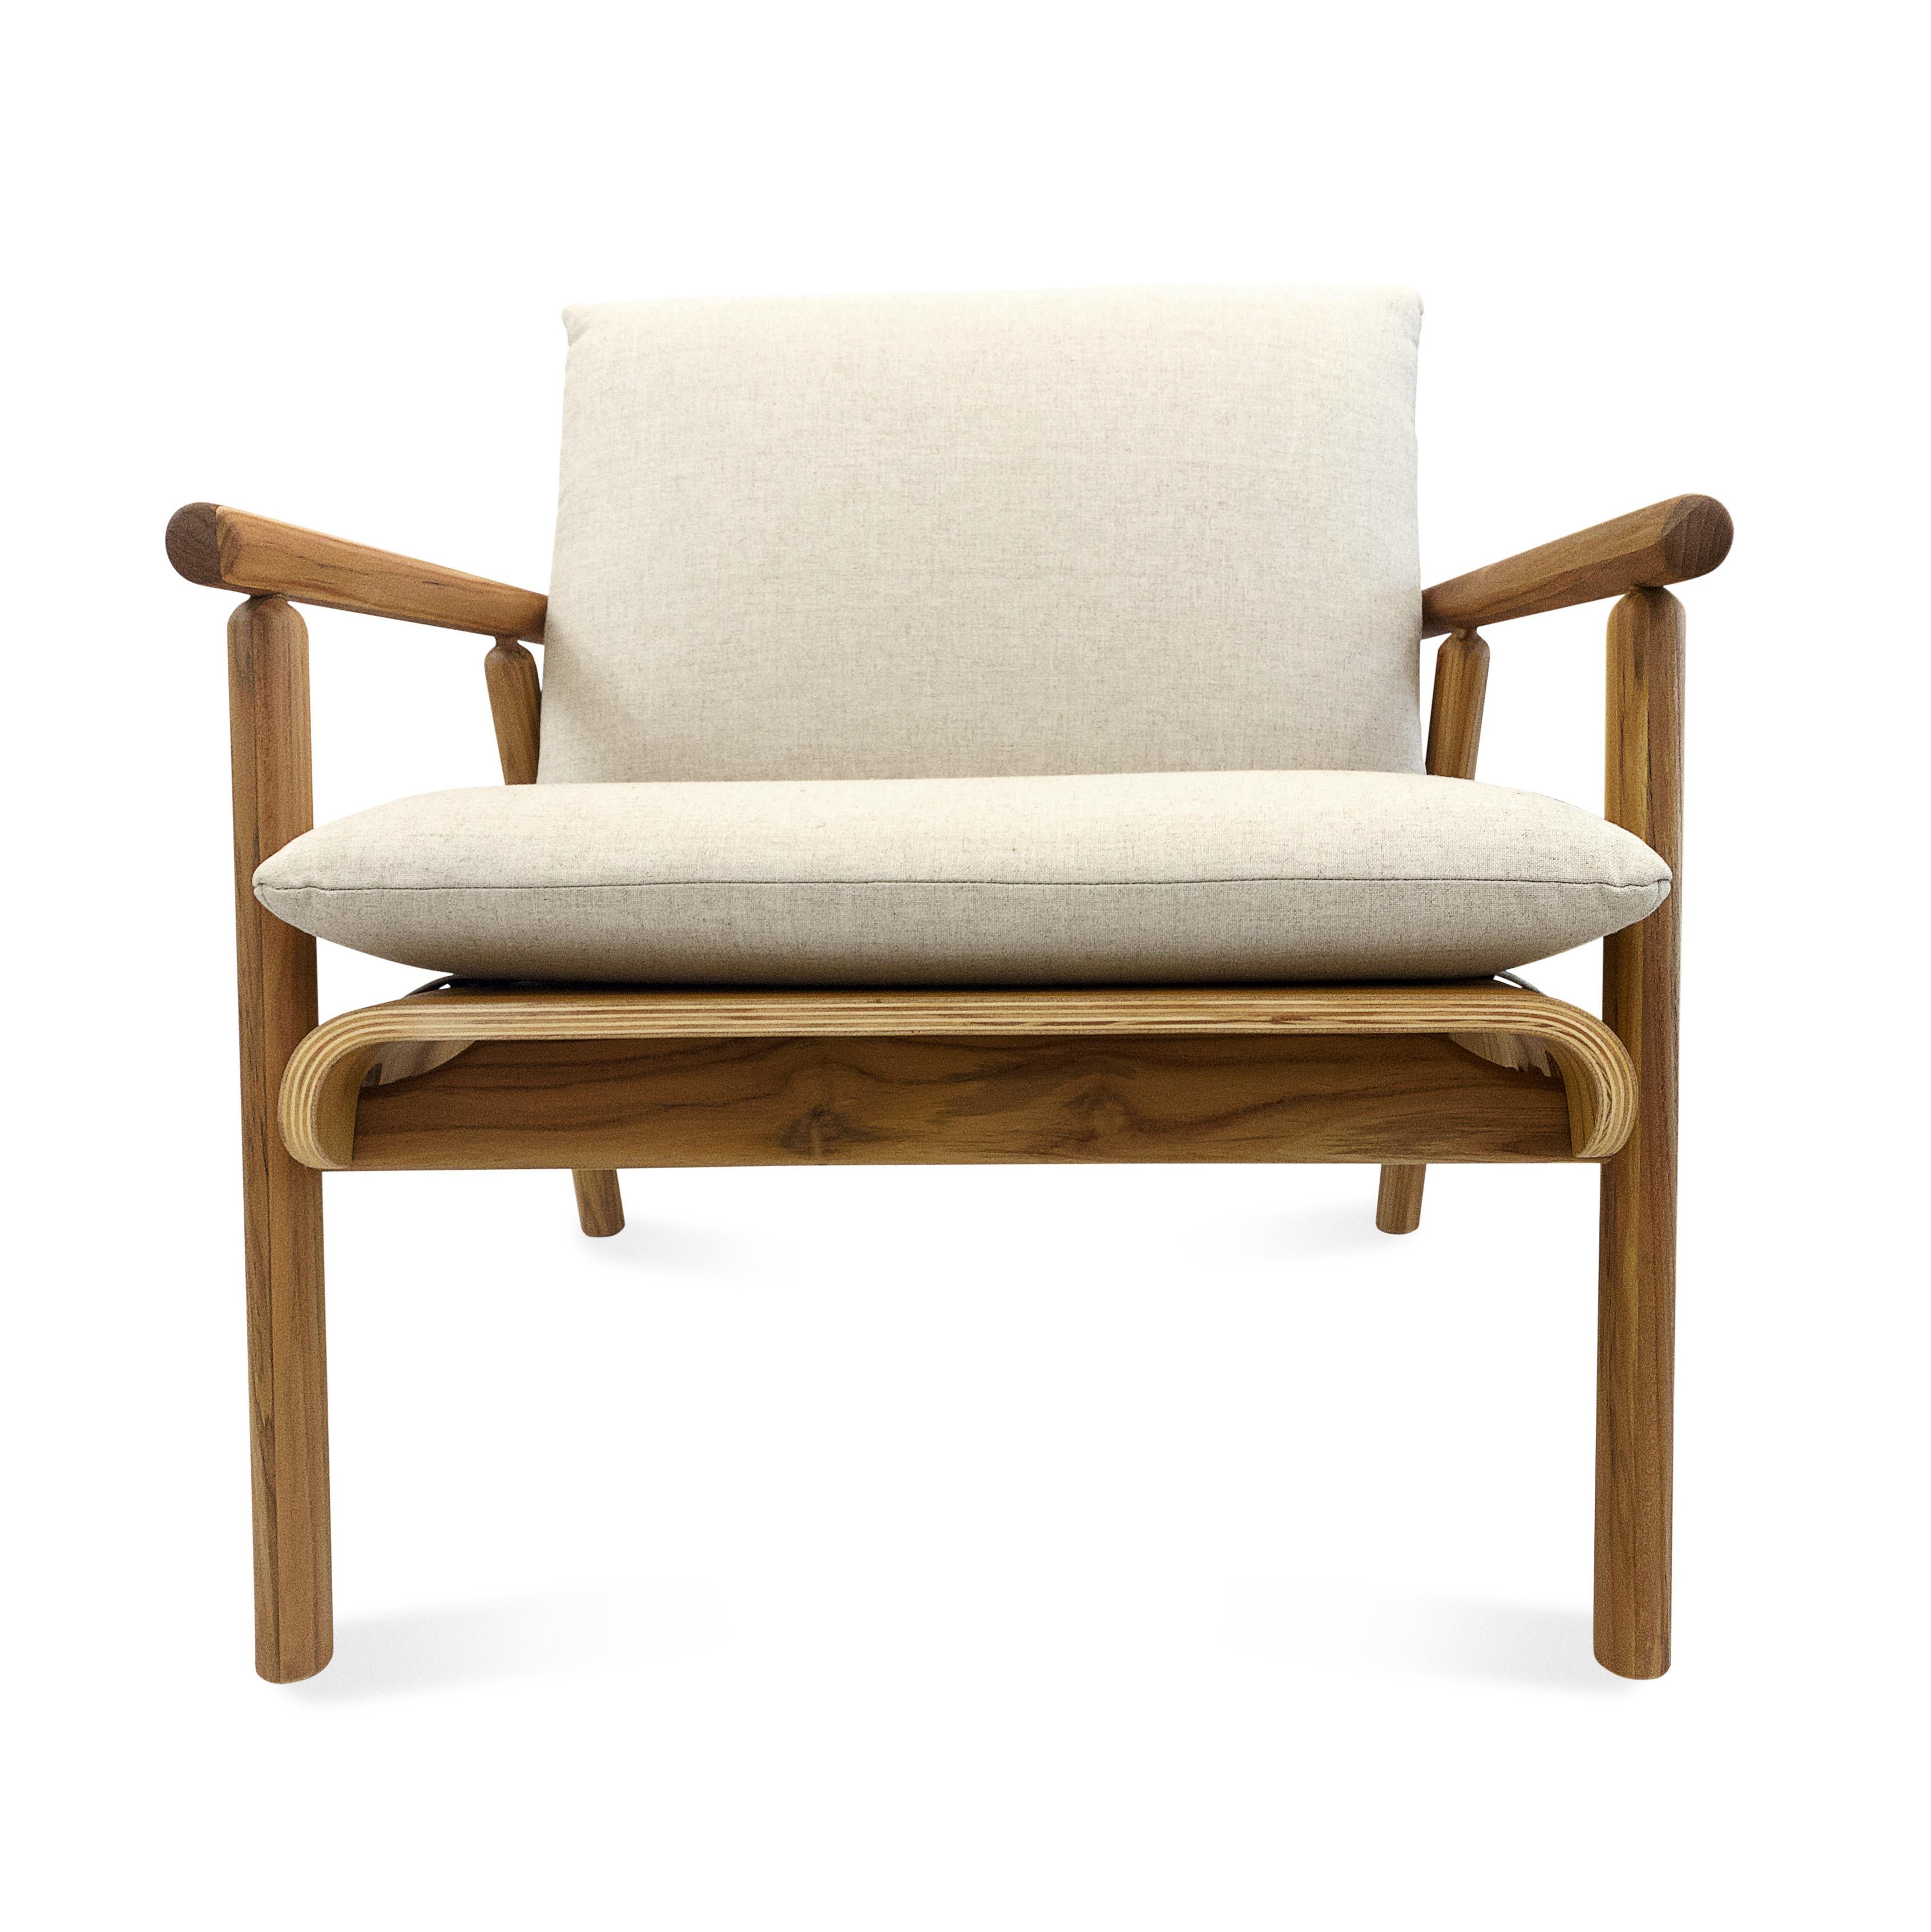 Brazilian Tai Armchair in Teak Wood Finish with Light Beige Fabric Cushions For Sale